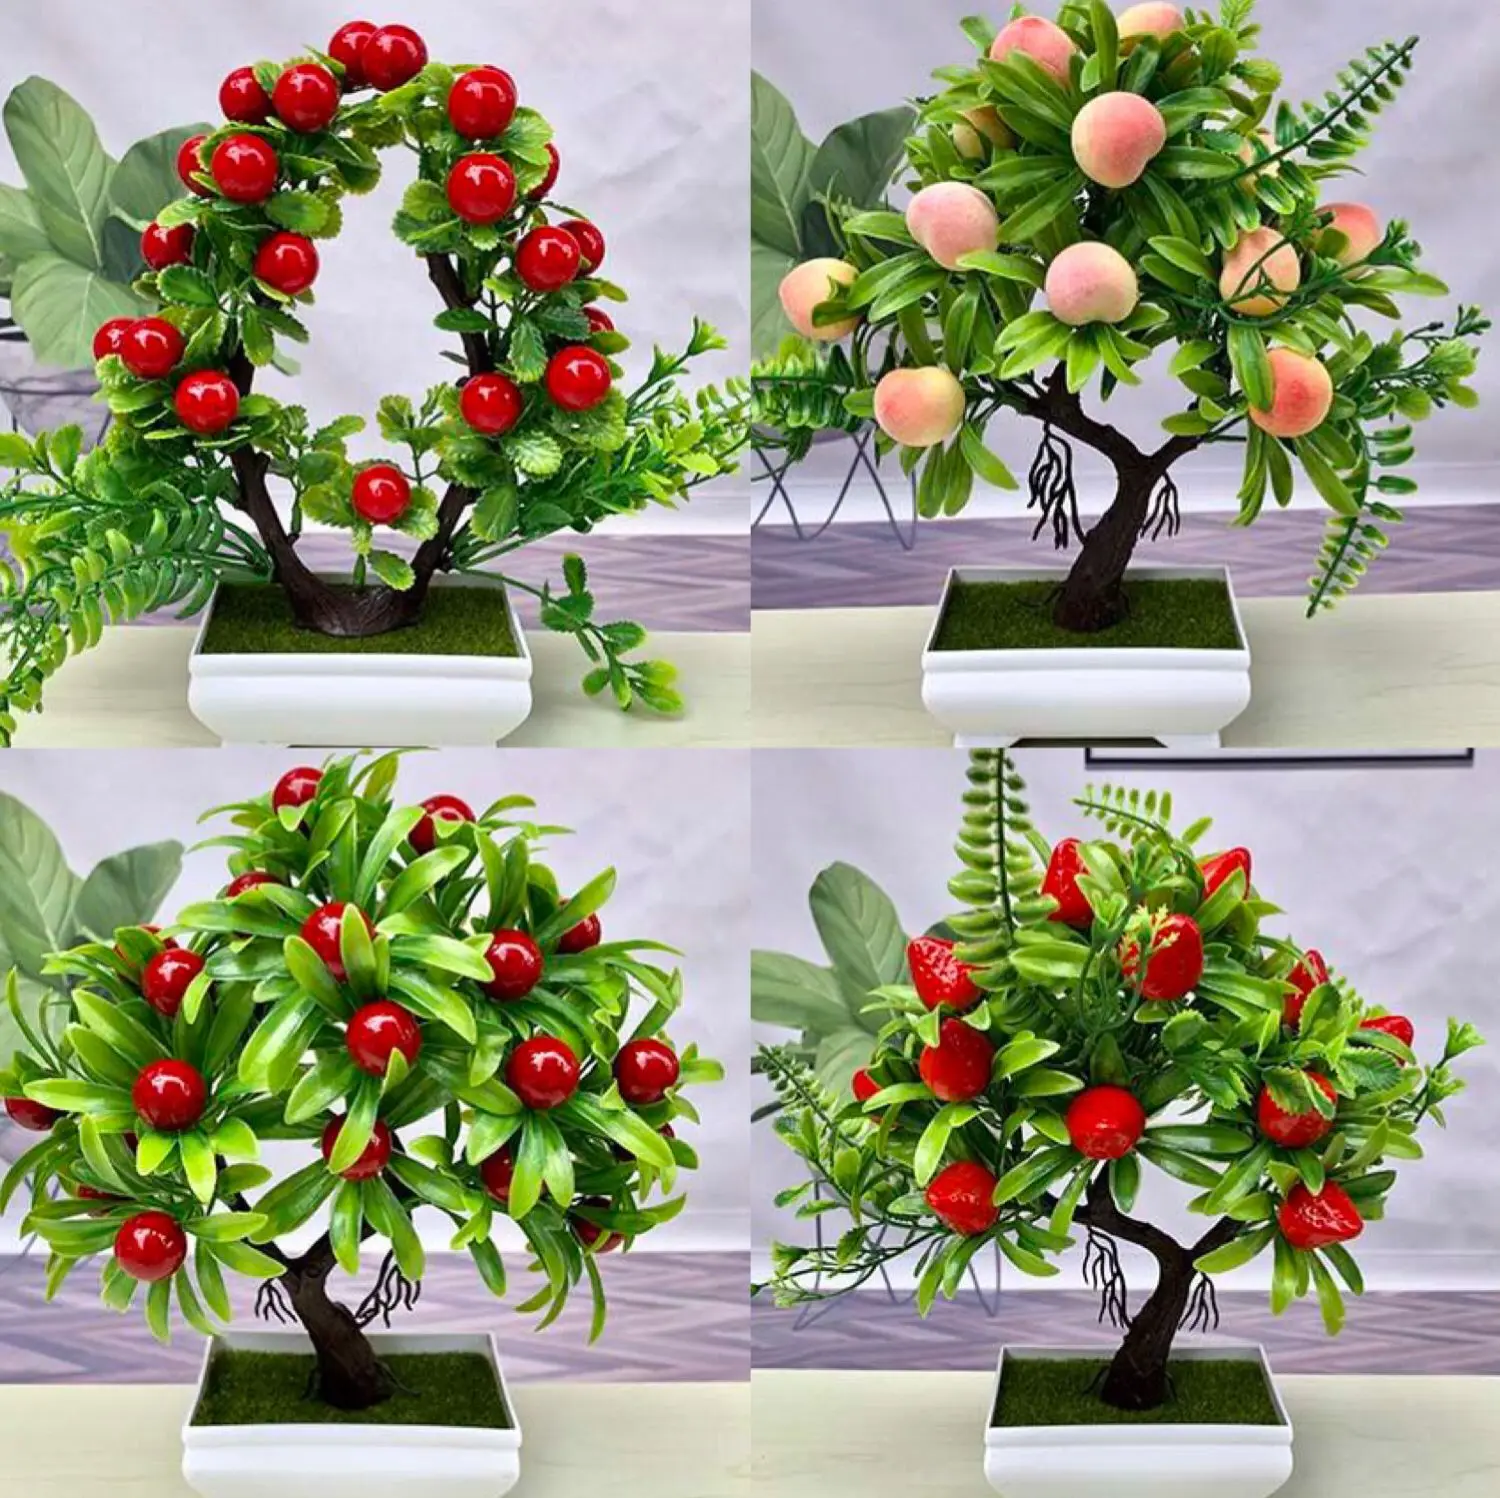 HB 1Pcs Artificial Fruit Tree Fake Garden Plant Miniascape Flower Home Decor DI 